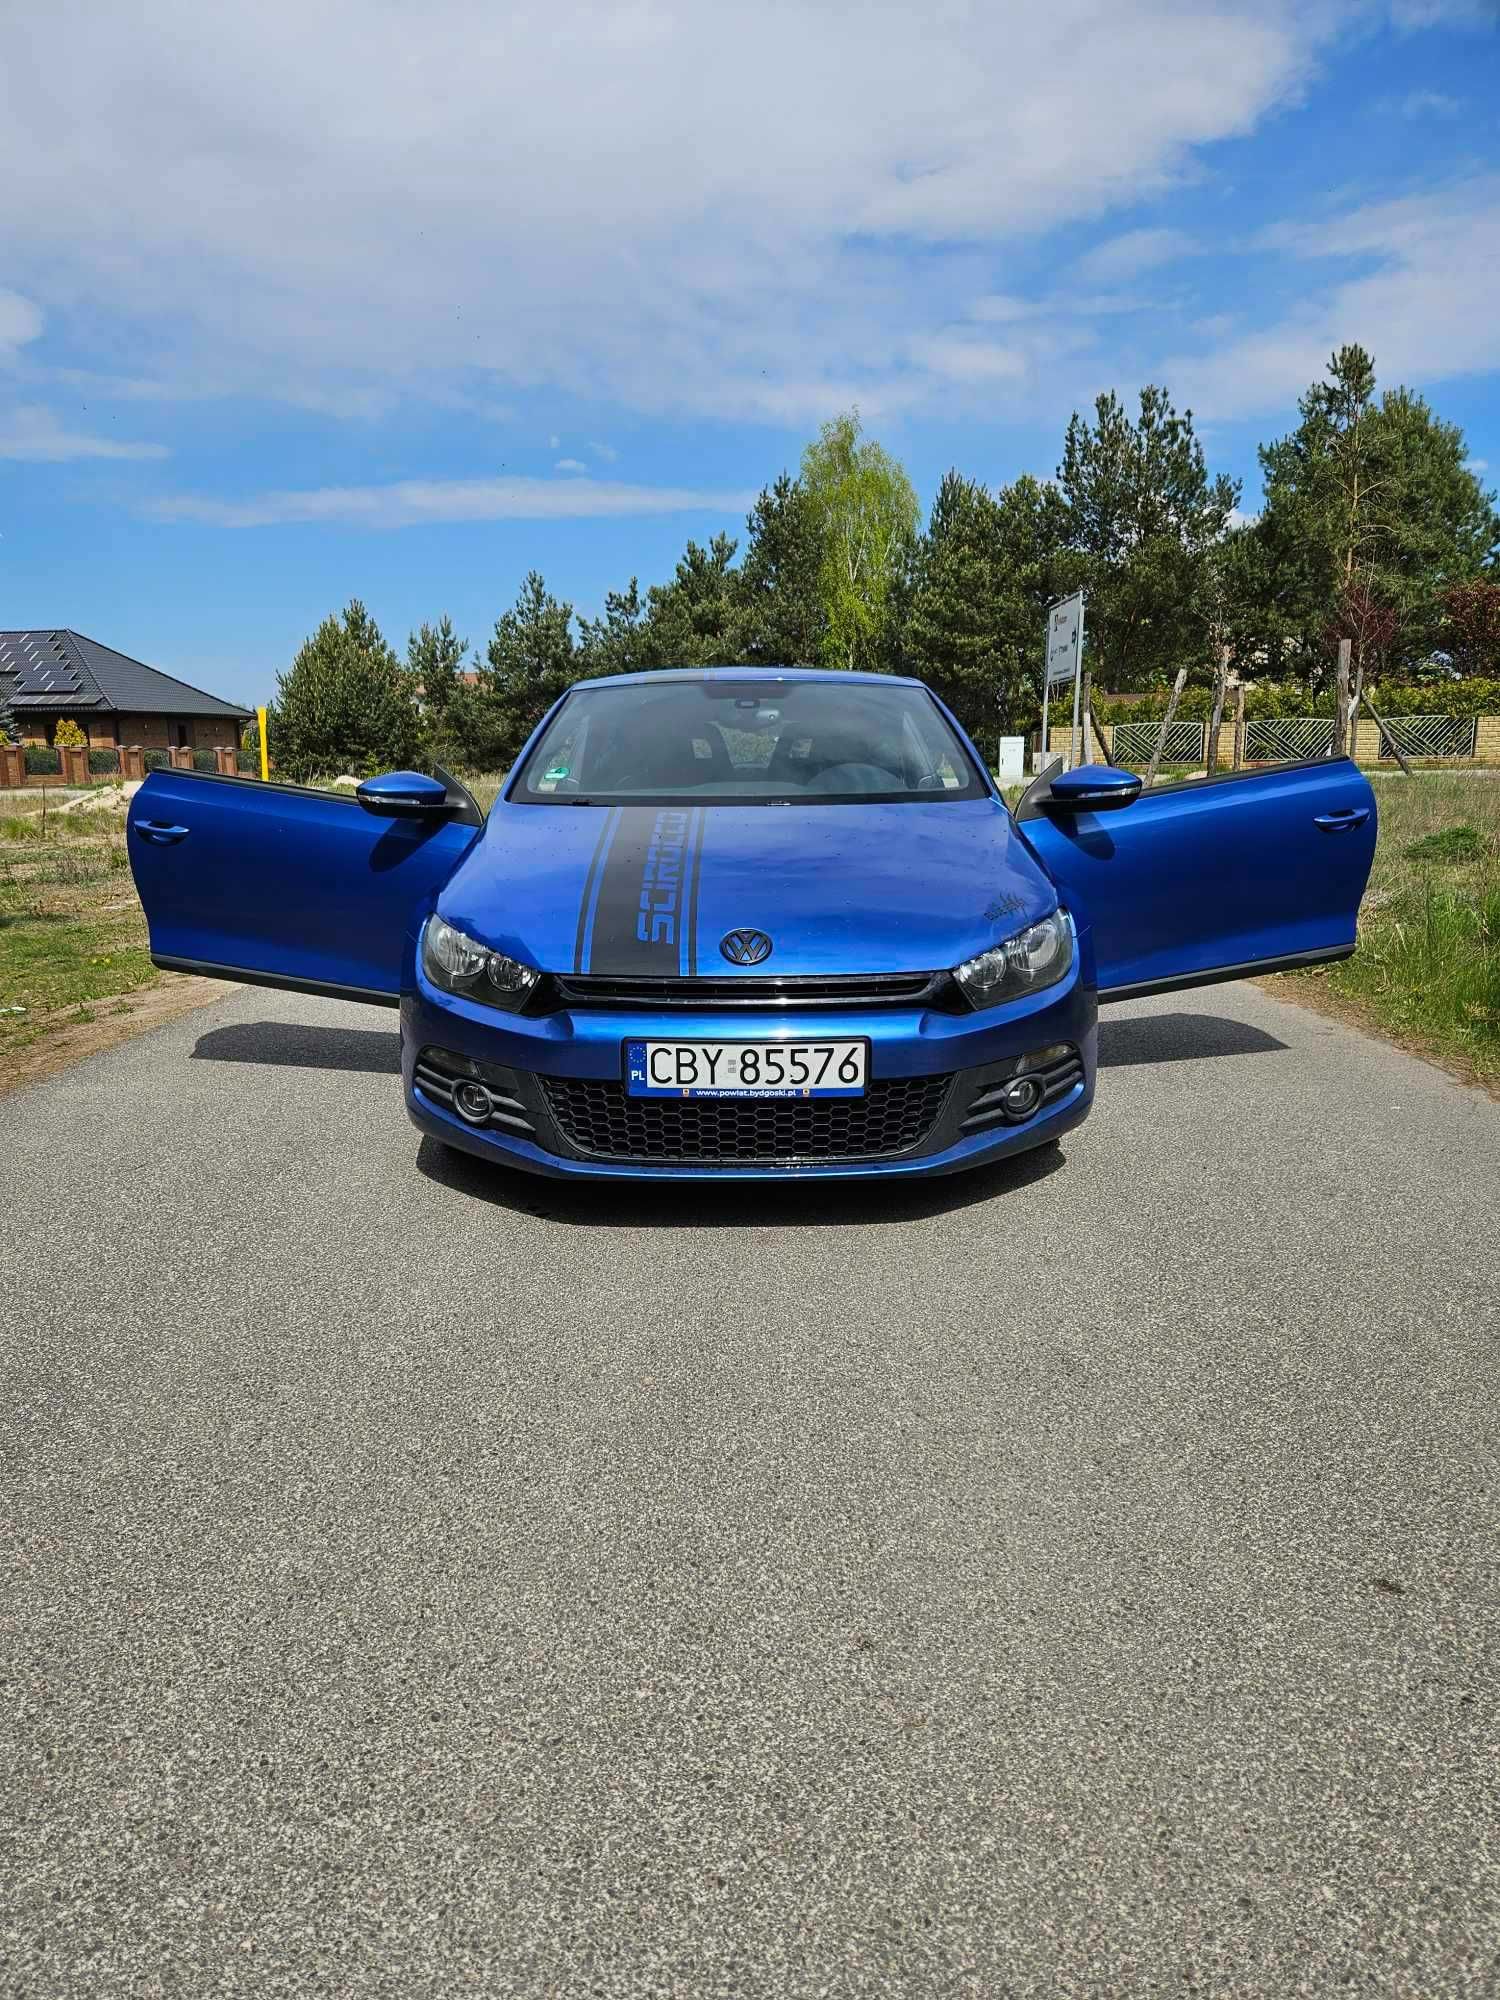 Volkswagen Scirocco 1.4 TSI Super niebieski kolor! Bardzo dobry stan!